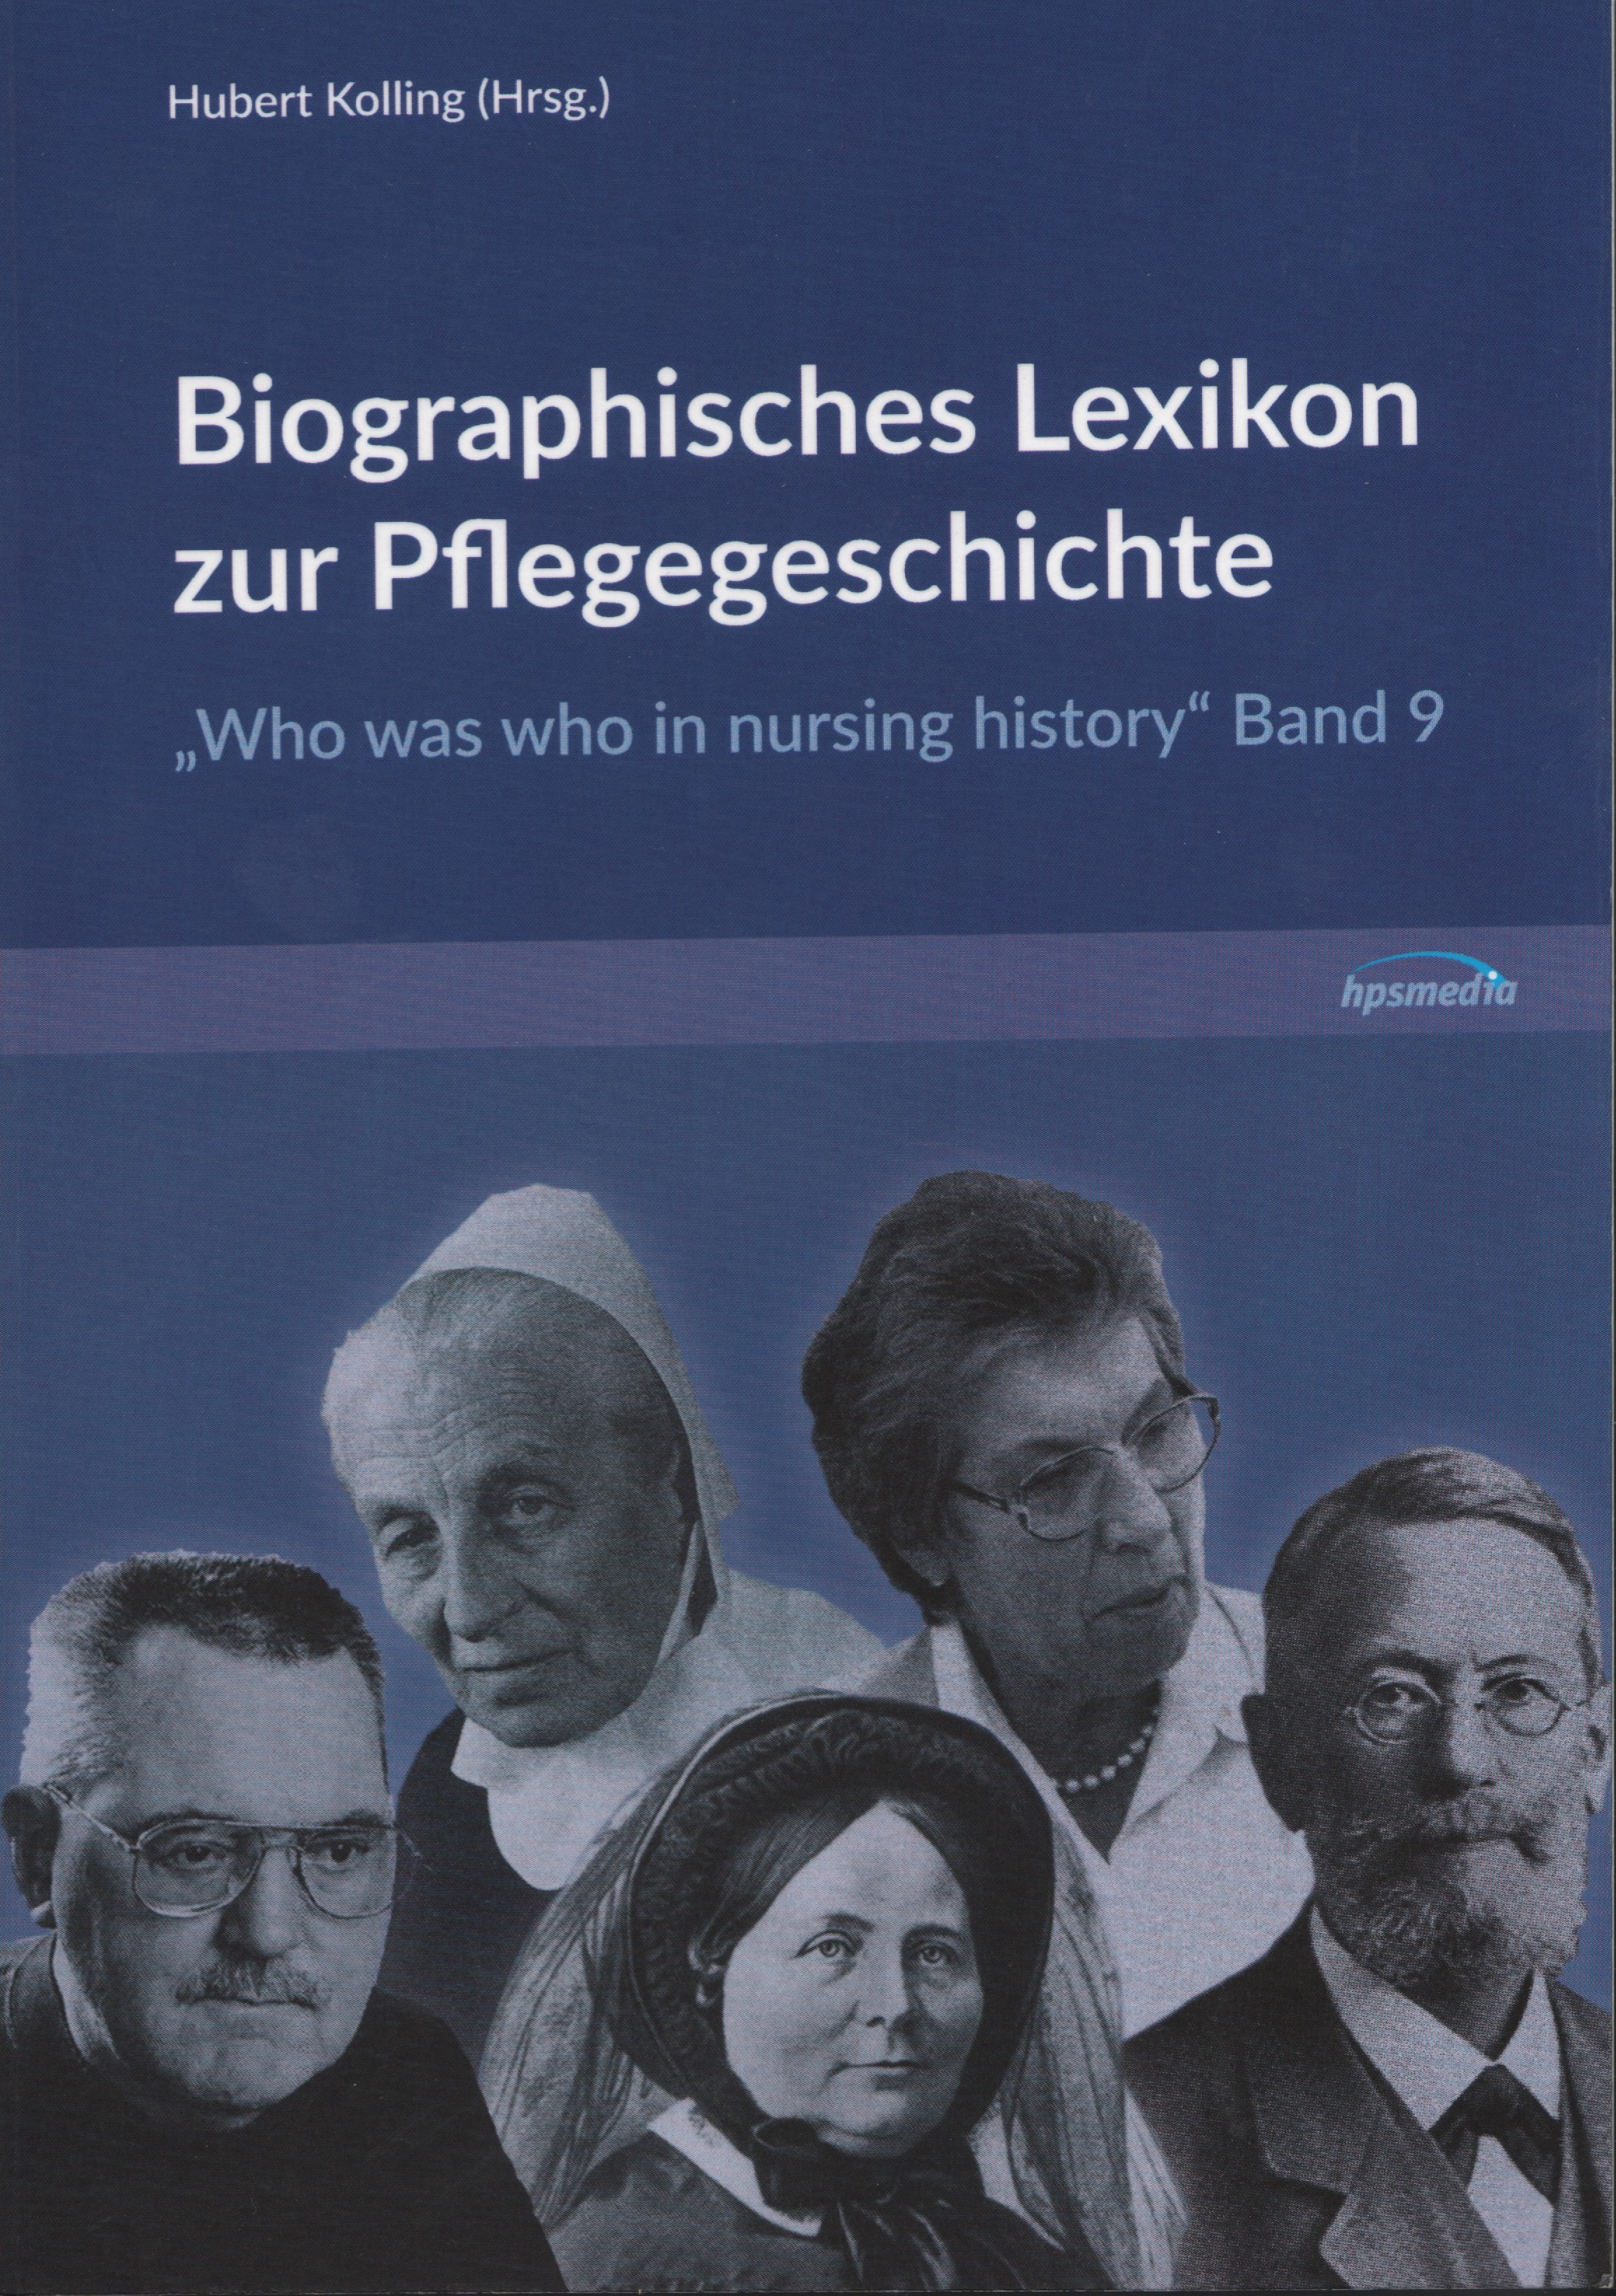 Cover zu KOLLING Biographisches Lexikon, Band 9